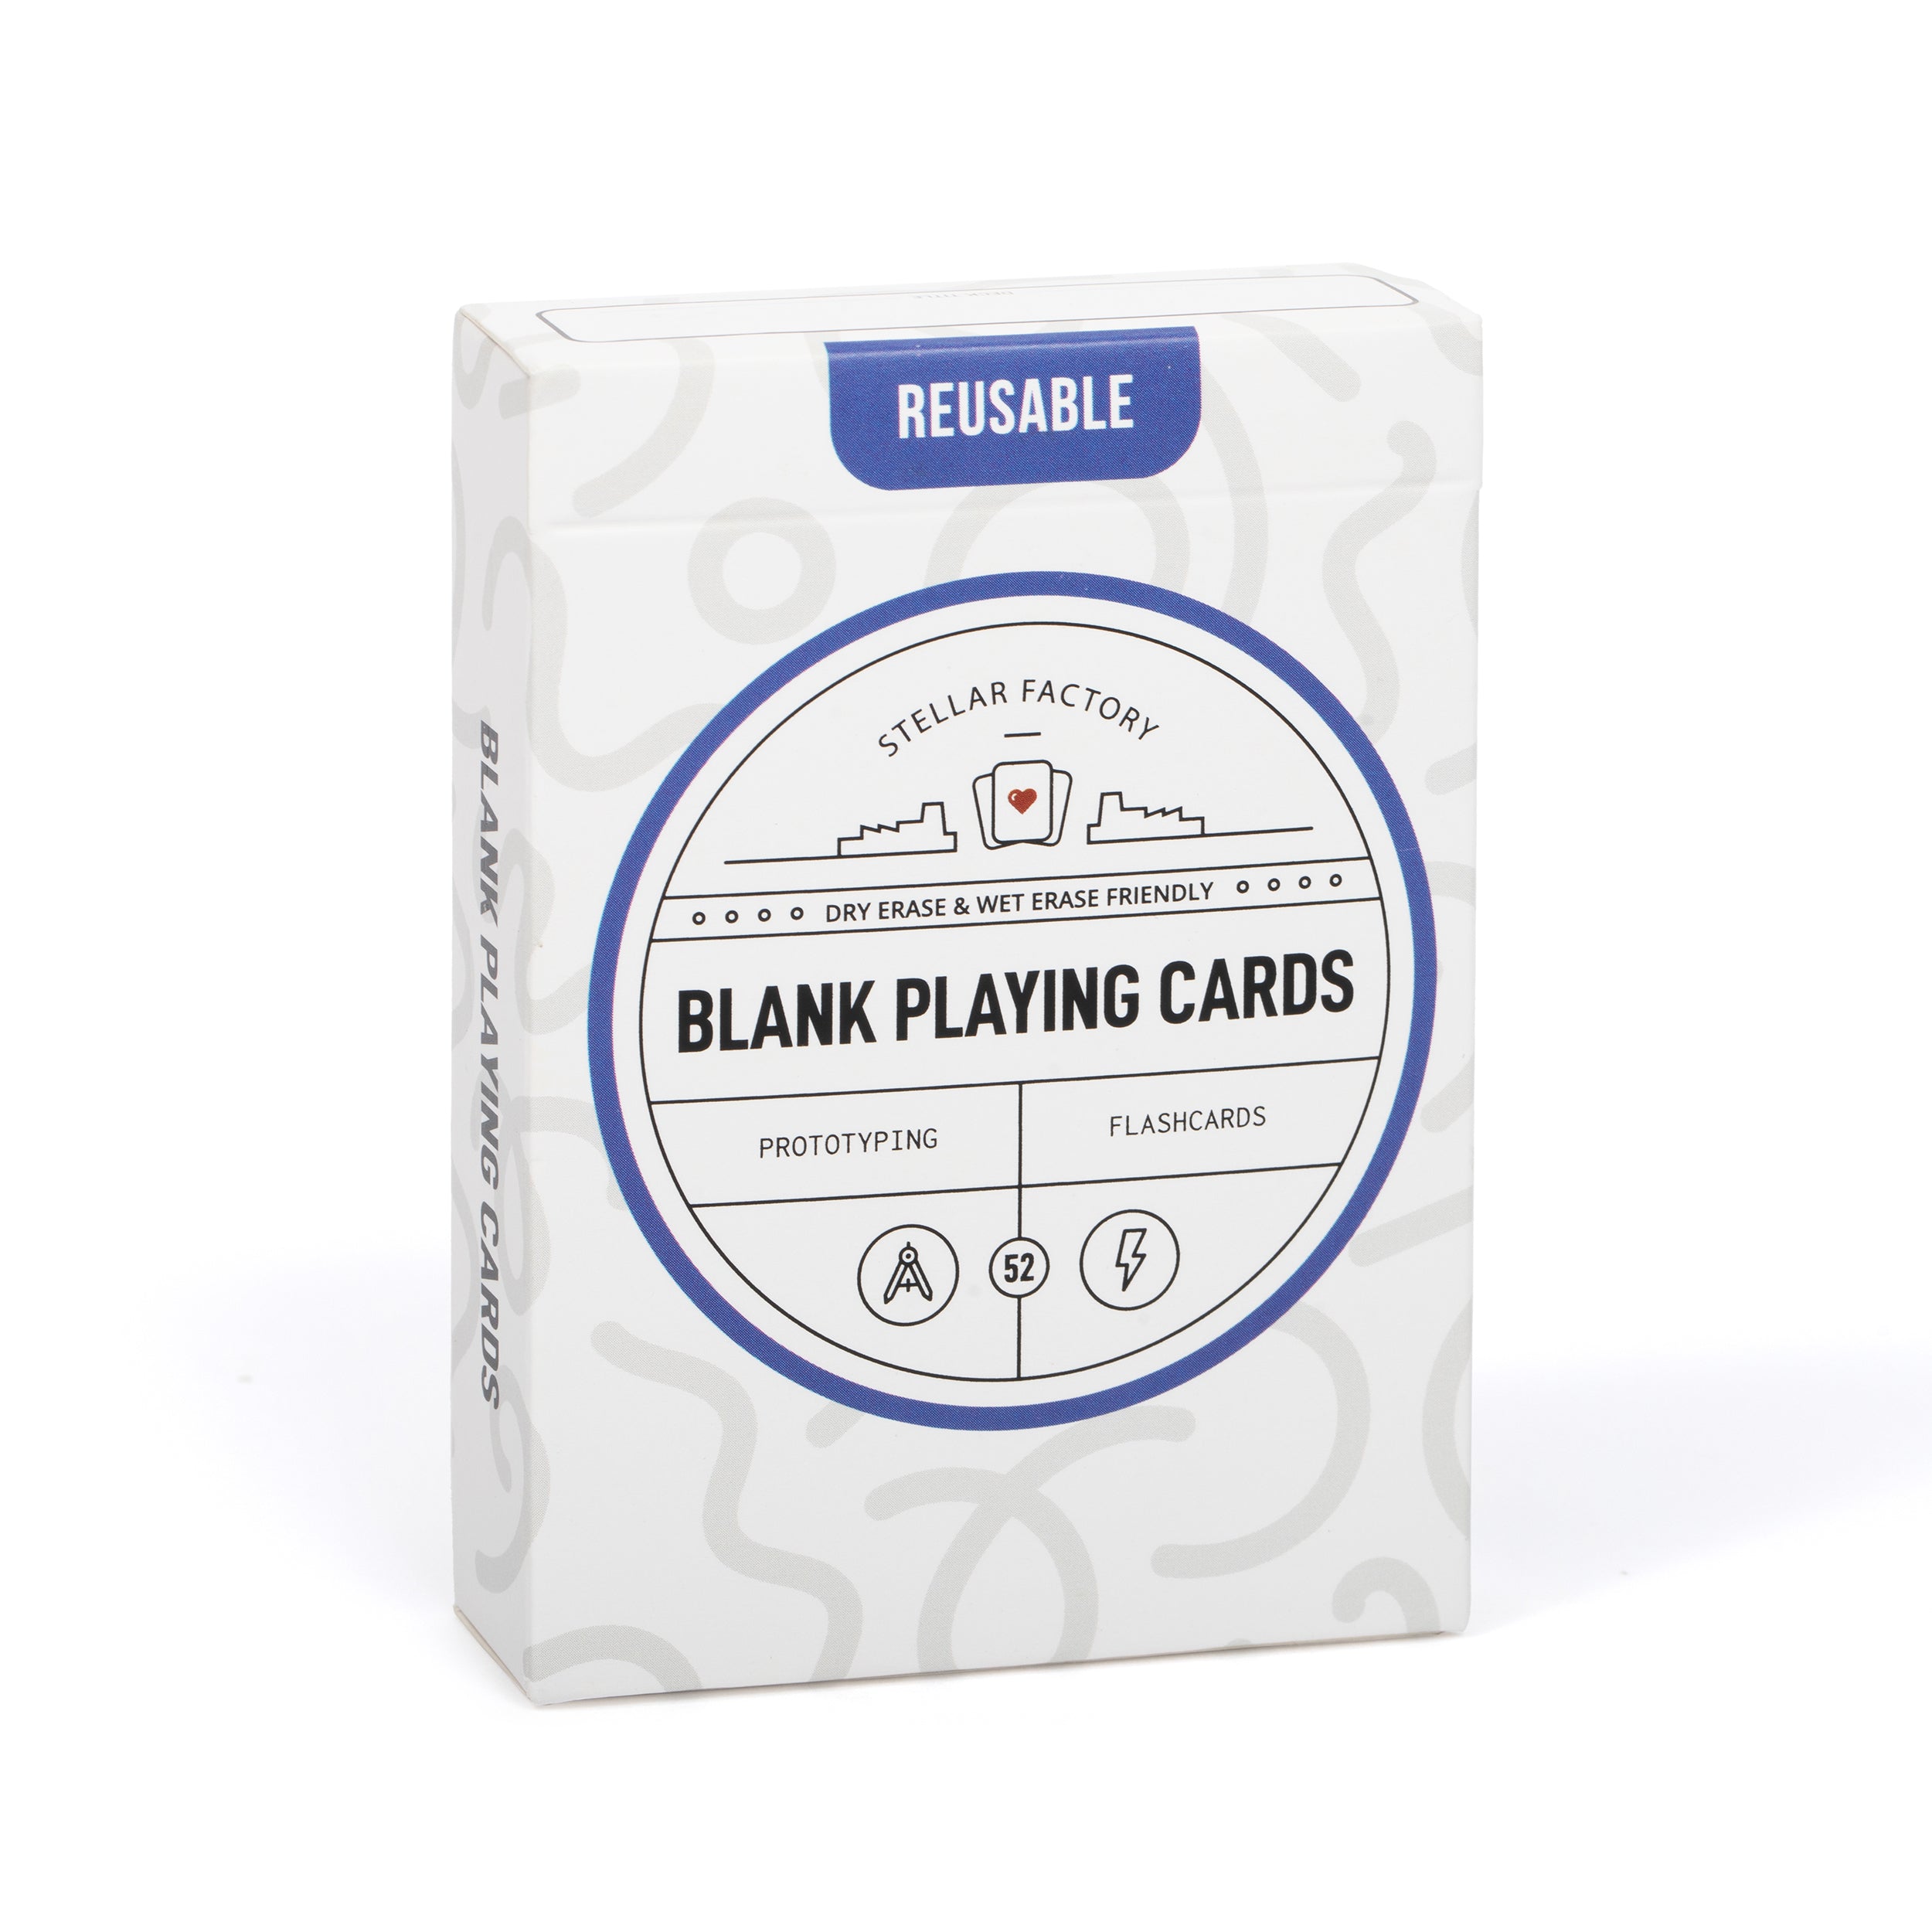 Reusable Blank Playing Cards – Stellar Factory